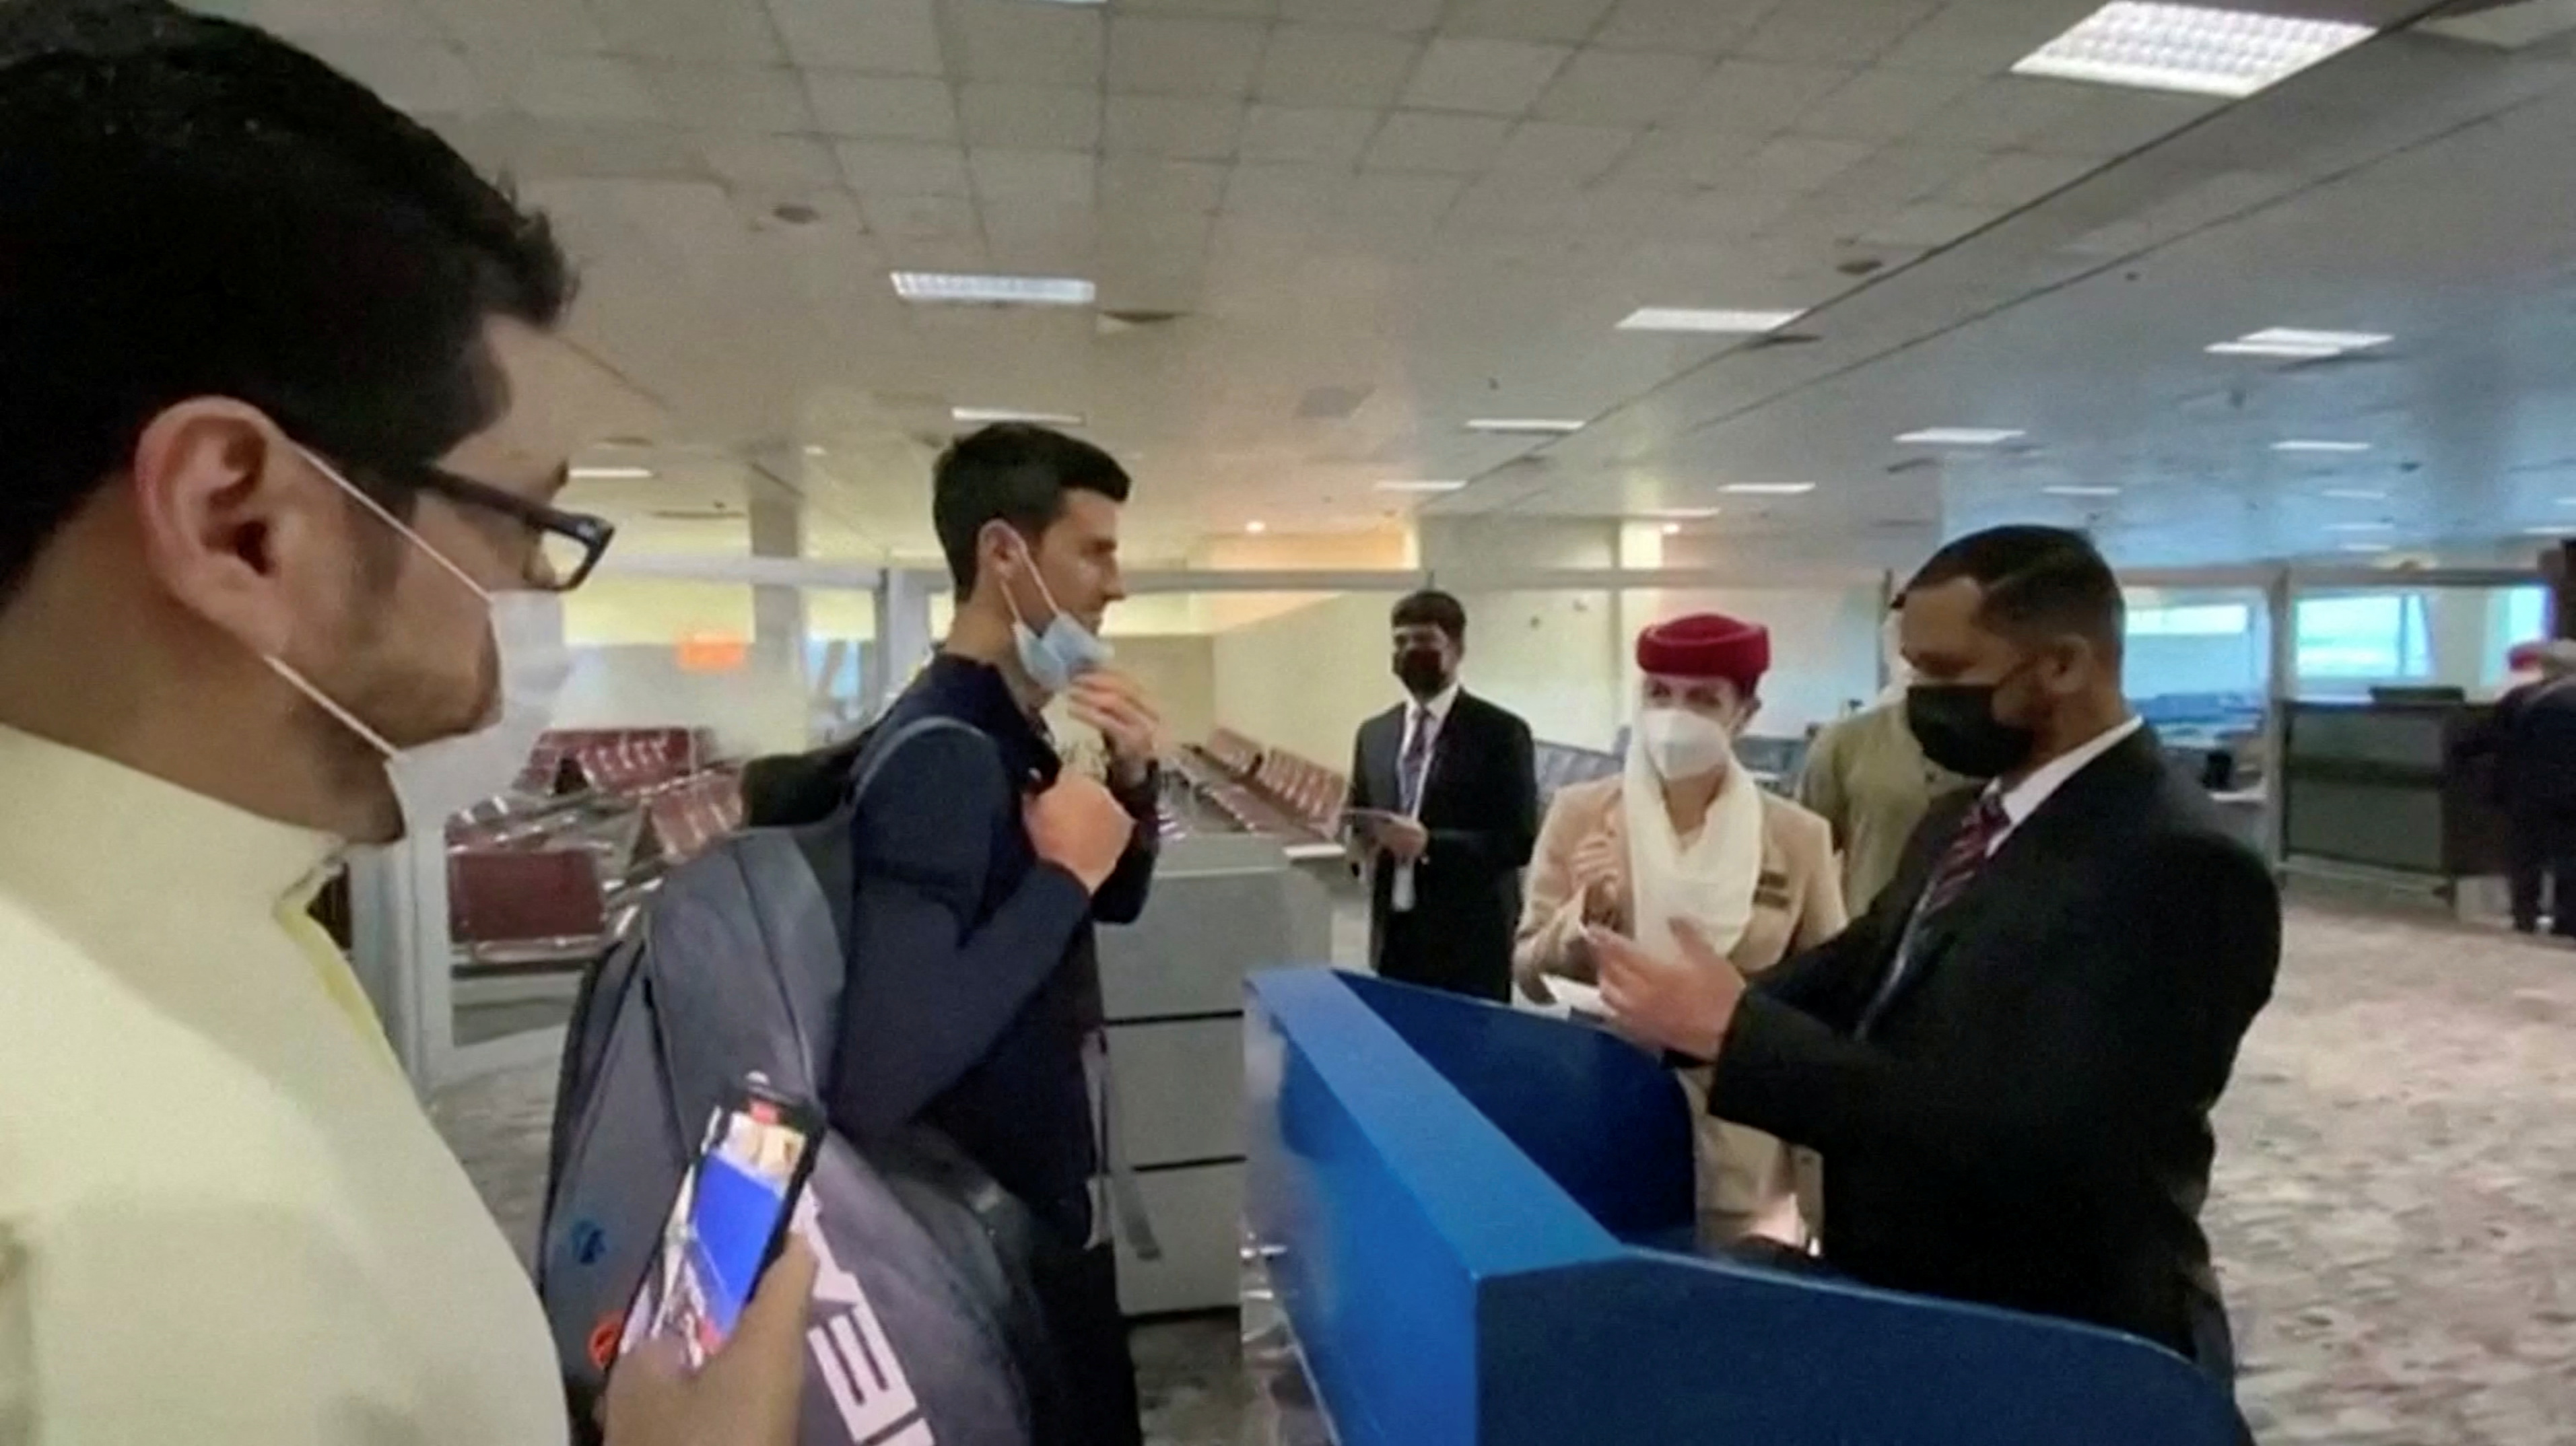 Serbian tennis player Djokovic is seen boarding flight to Belgrade from Dubai airport